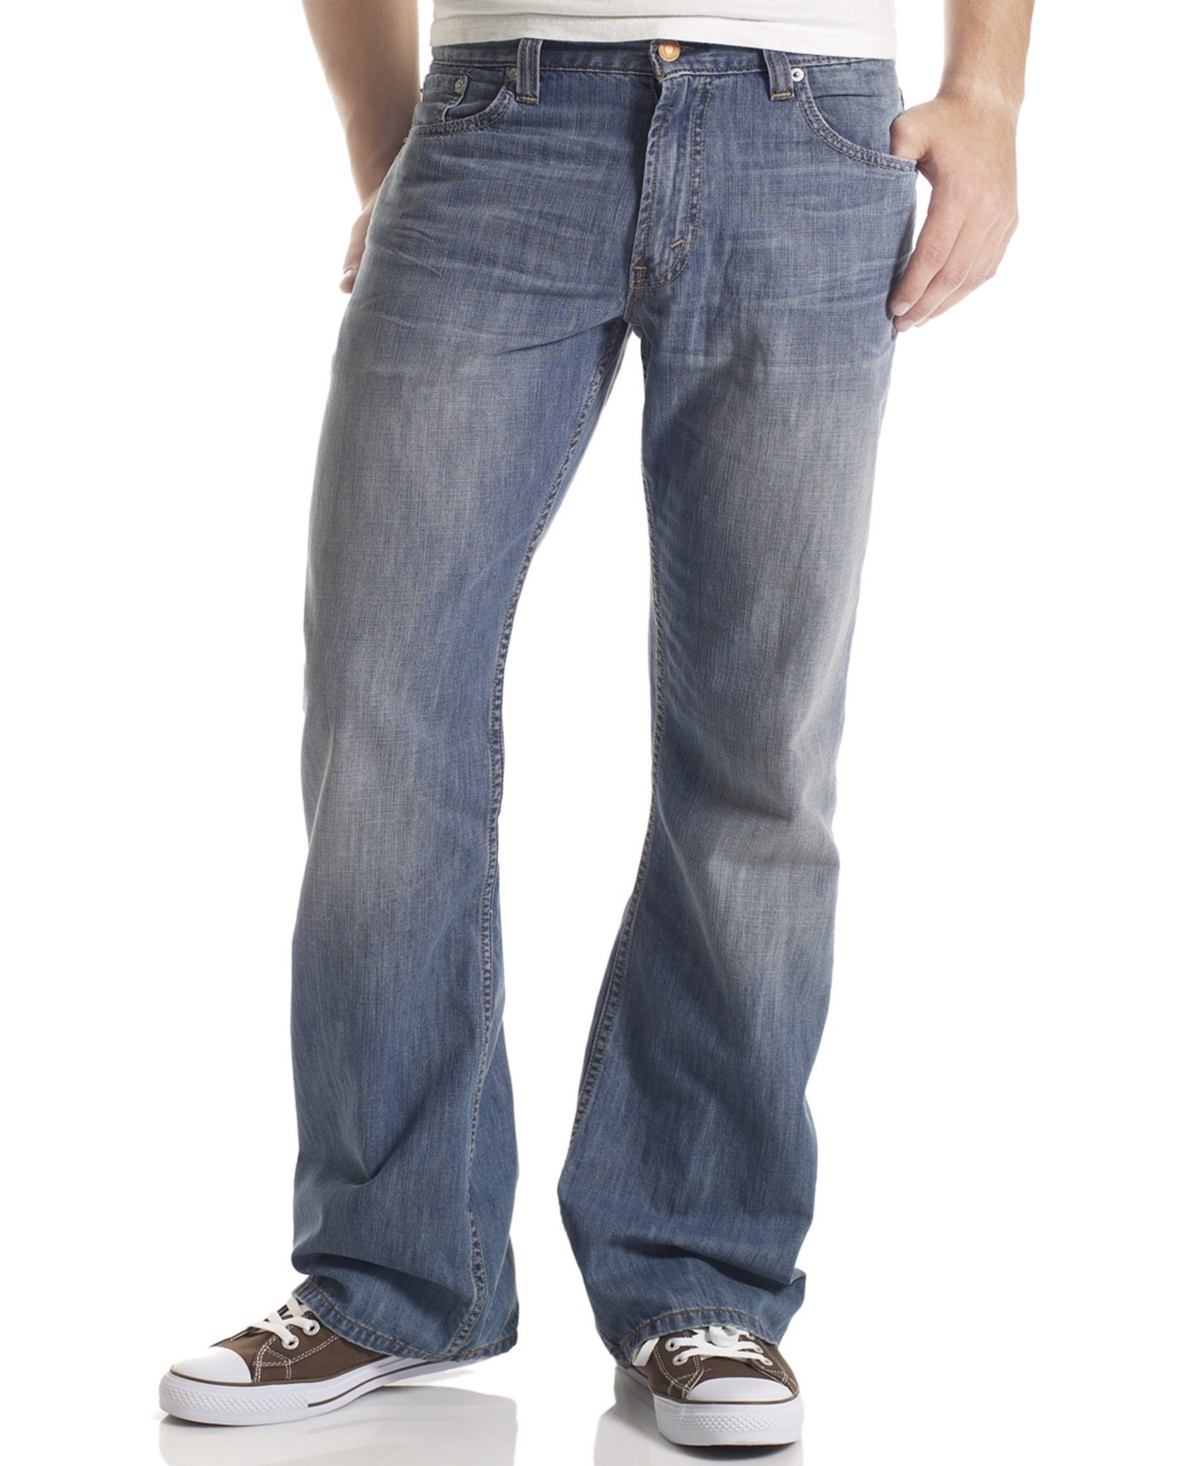 Levi's Men's 527 Low Rise Boot Cut Jean, Medium Chipped, 36X30